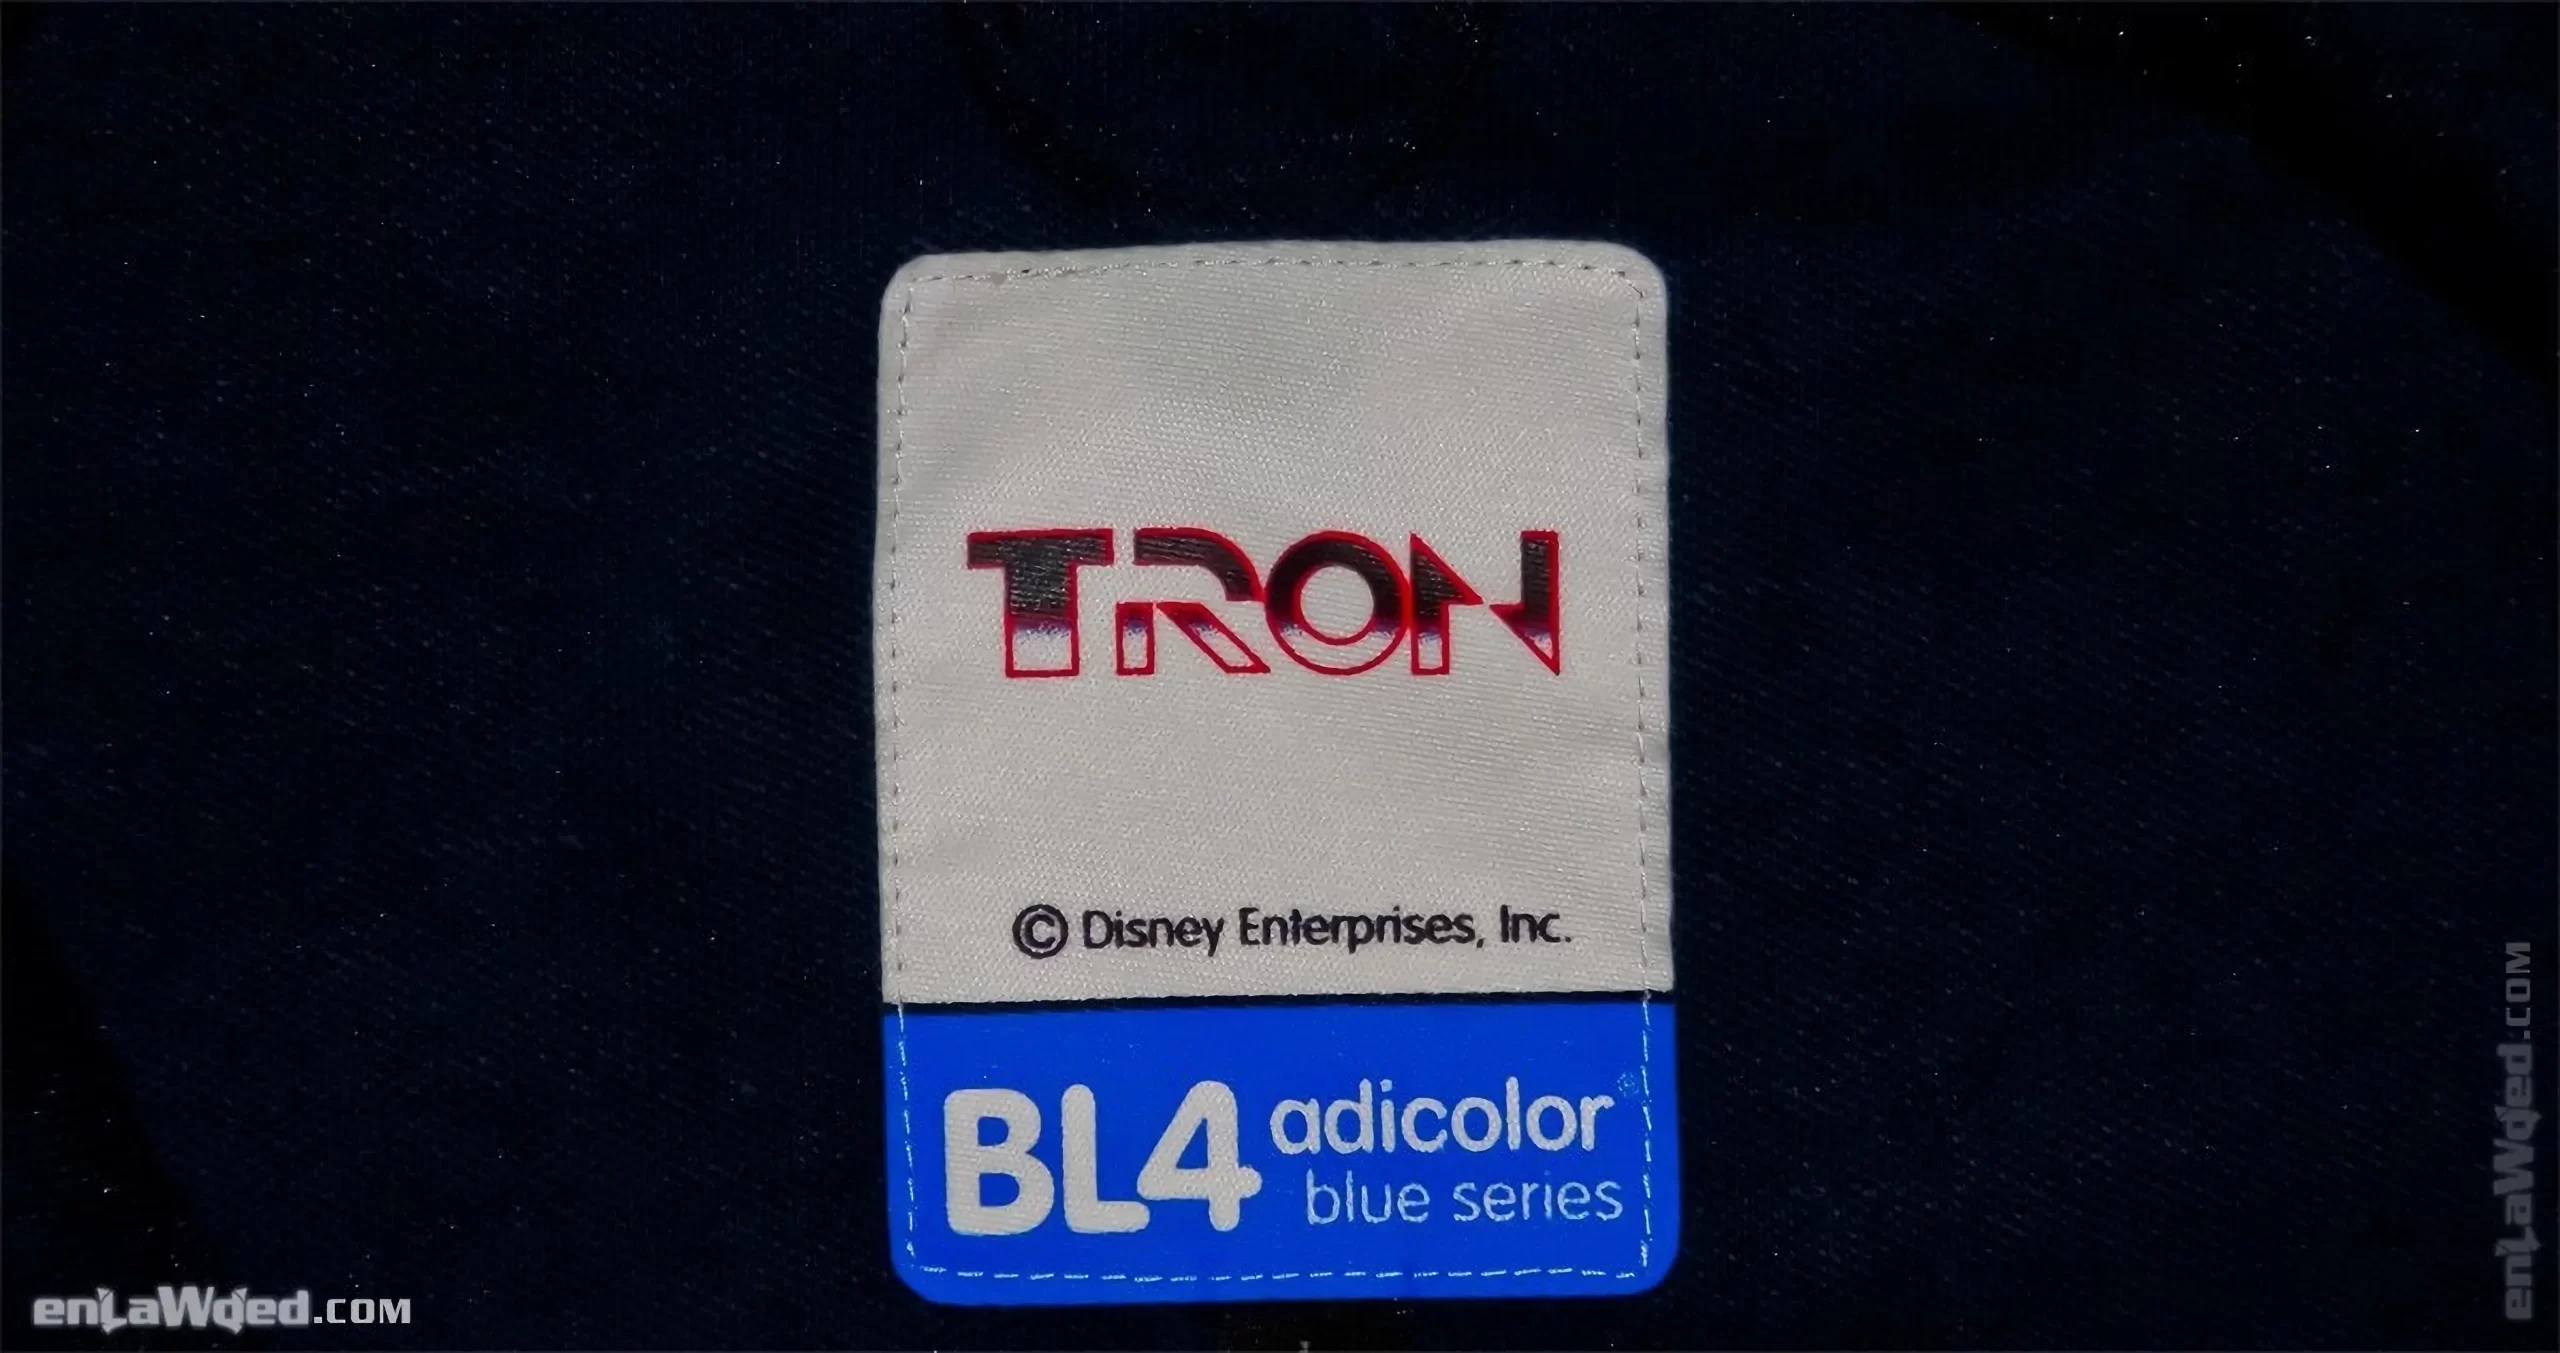 Men’s 2006 Adicolor BL4 Tron TT by Adidas Originals: Gift (EnLawded.com file #lmcfov0nwll1qjkfne)